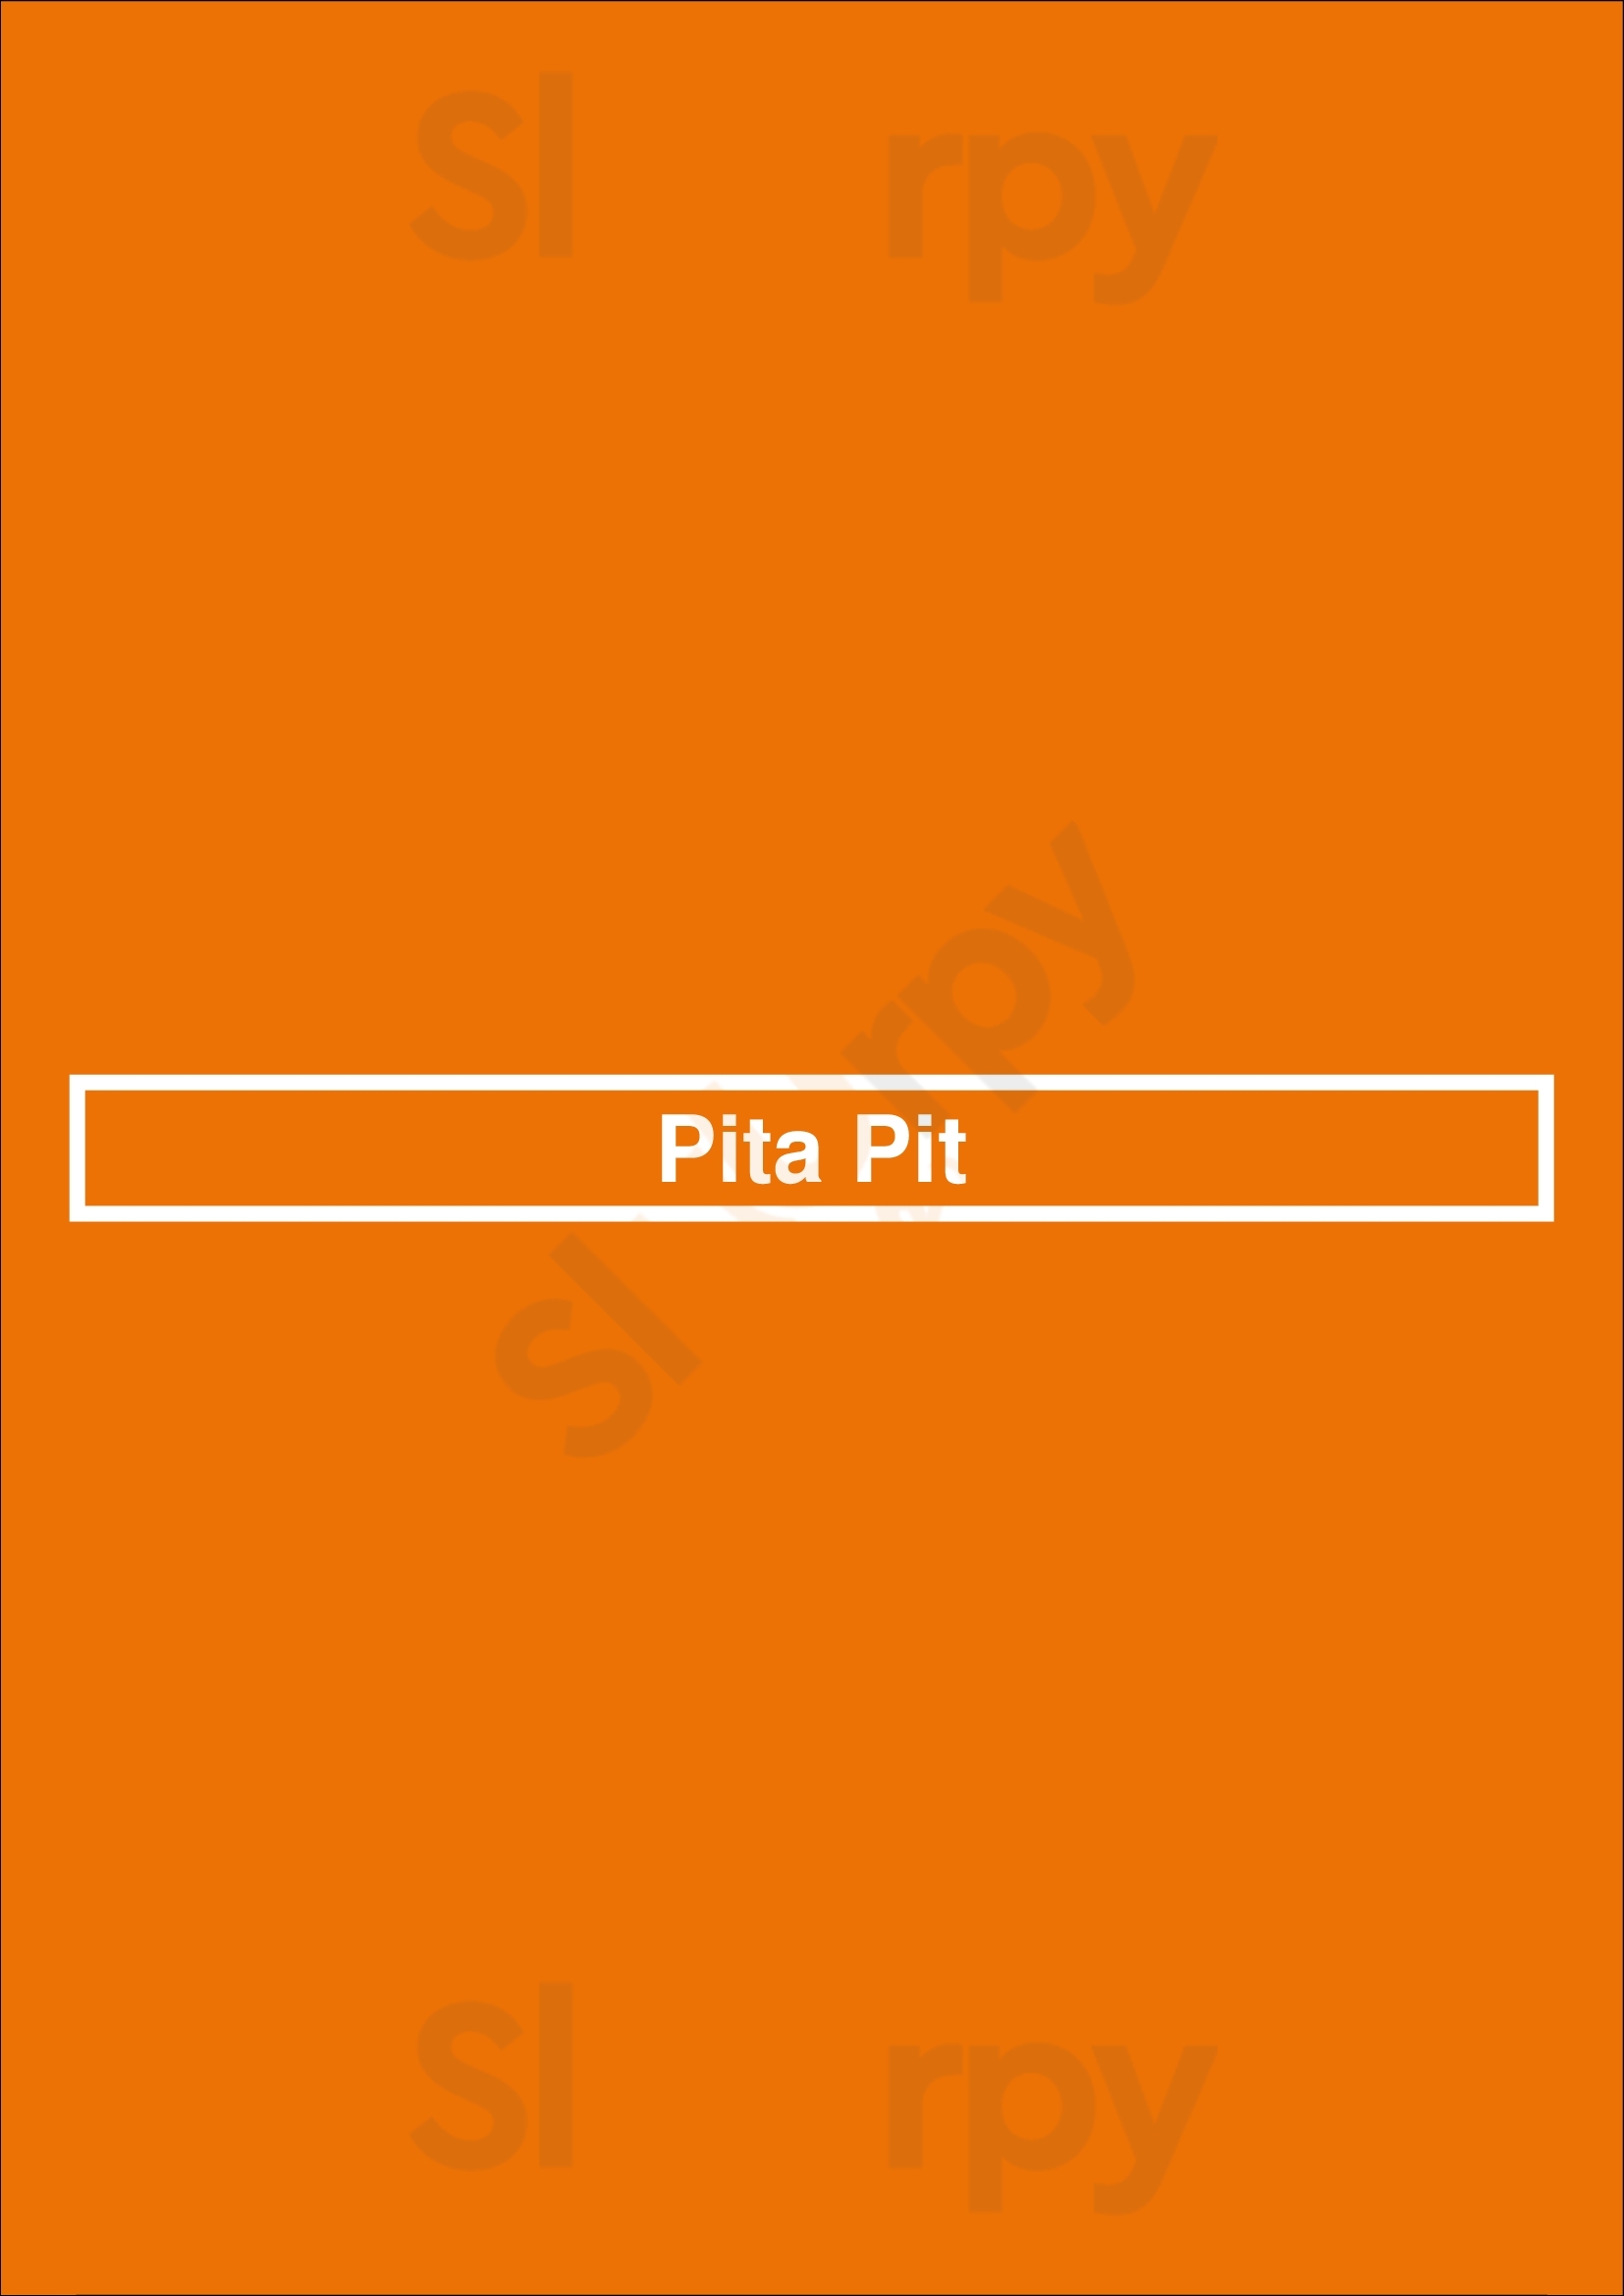 Pita Pit Toronto Menu - 1